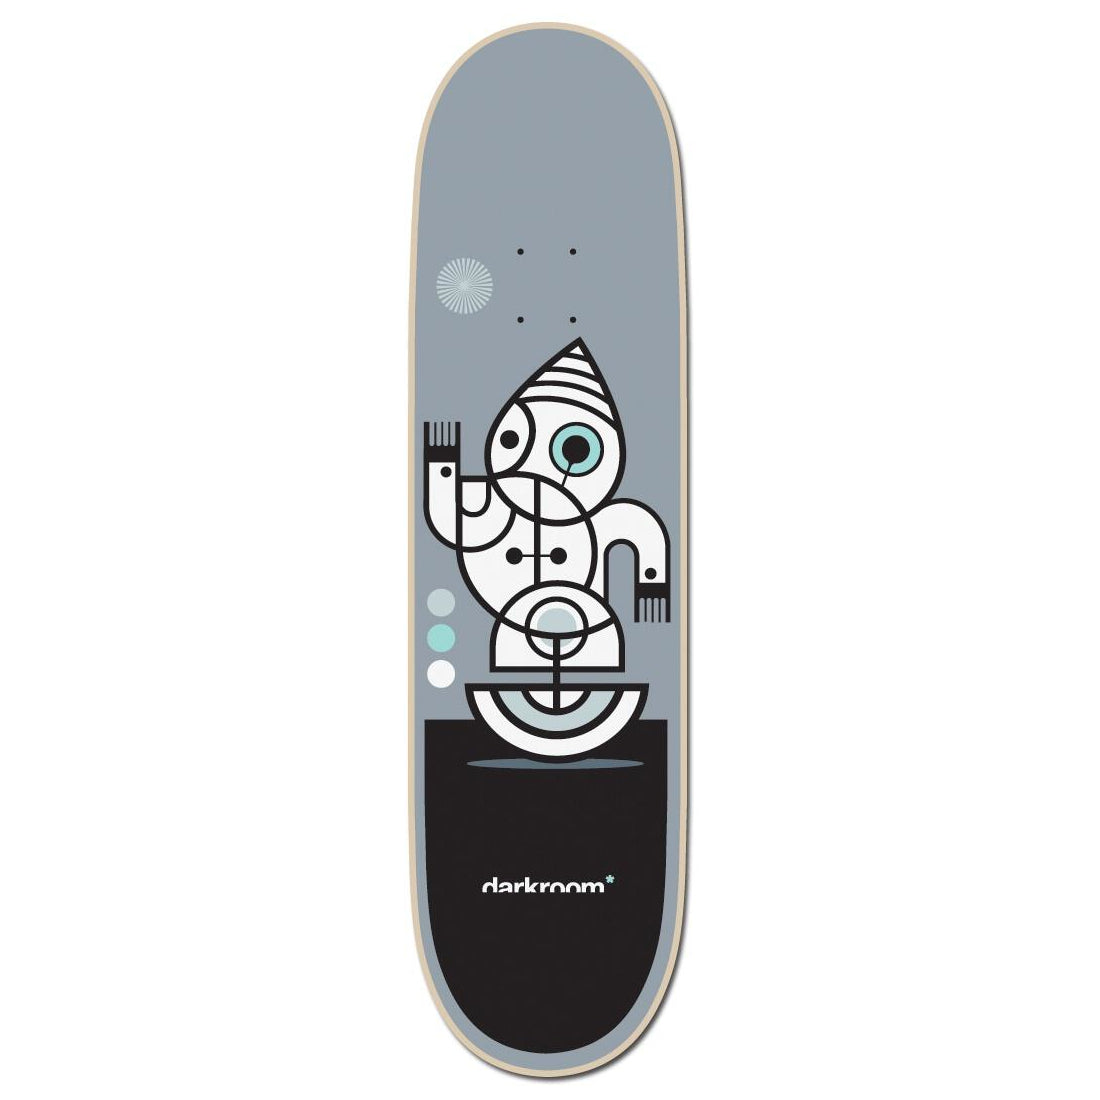 8.5" Lunar Darkroom Skateboard Deck